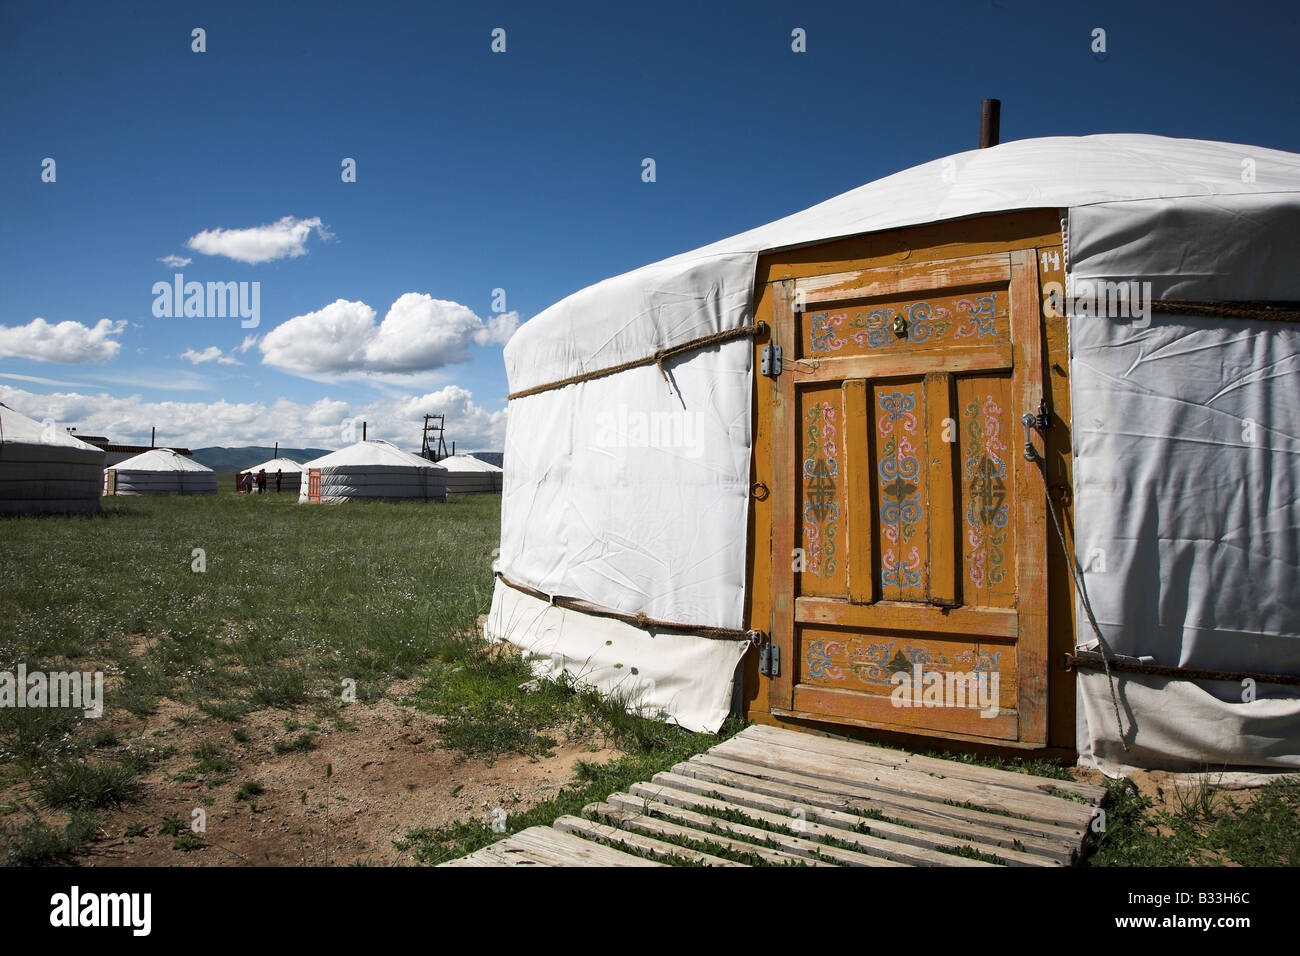 Ger tradizionali tende in Elstei vicino a Ulaan Baatar in Mongolia. Foto Stock